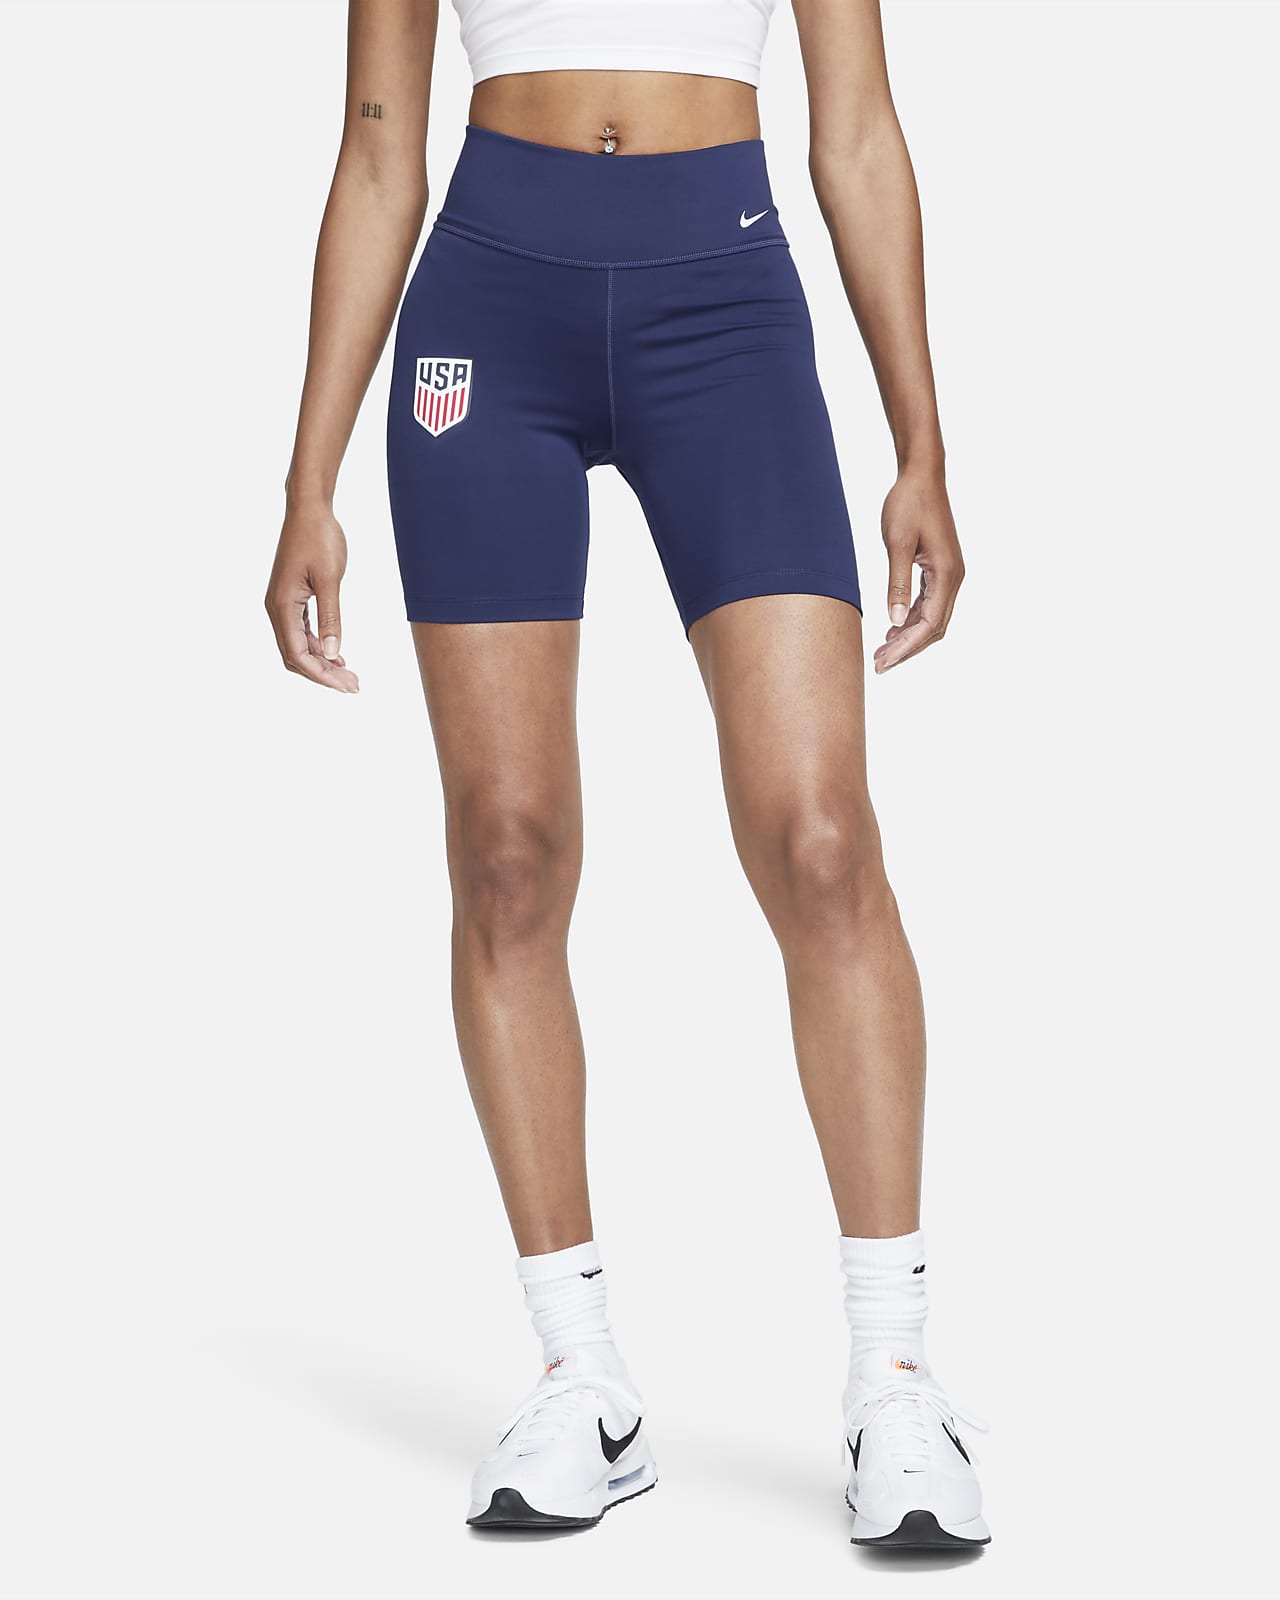 Mujer Atletismo Shorts. Nike US